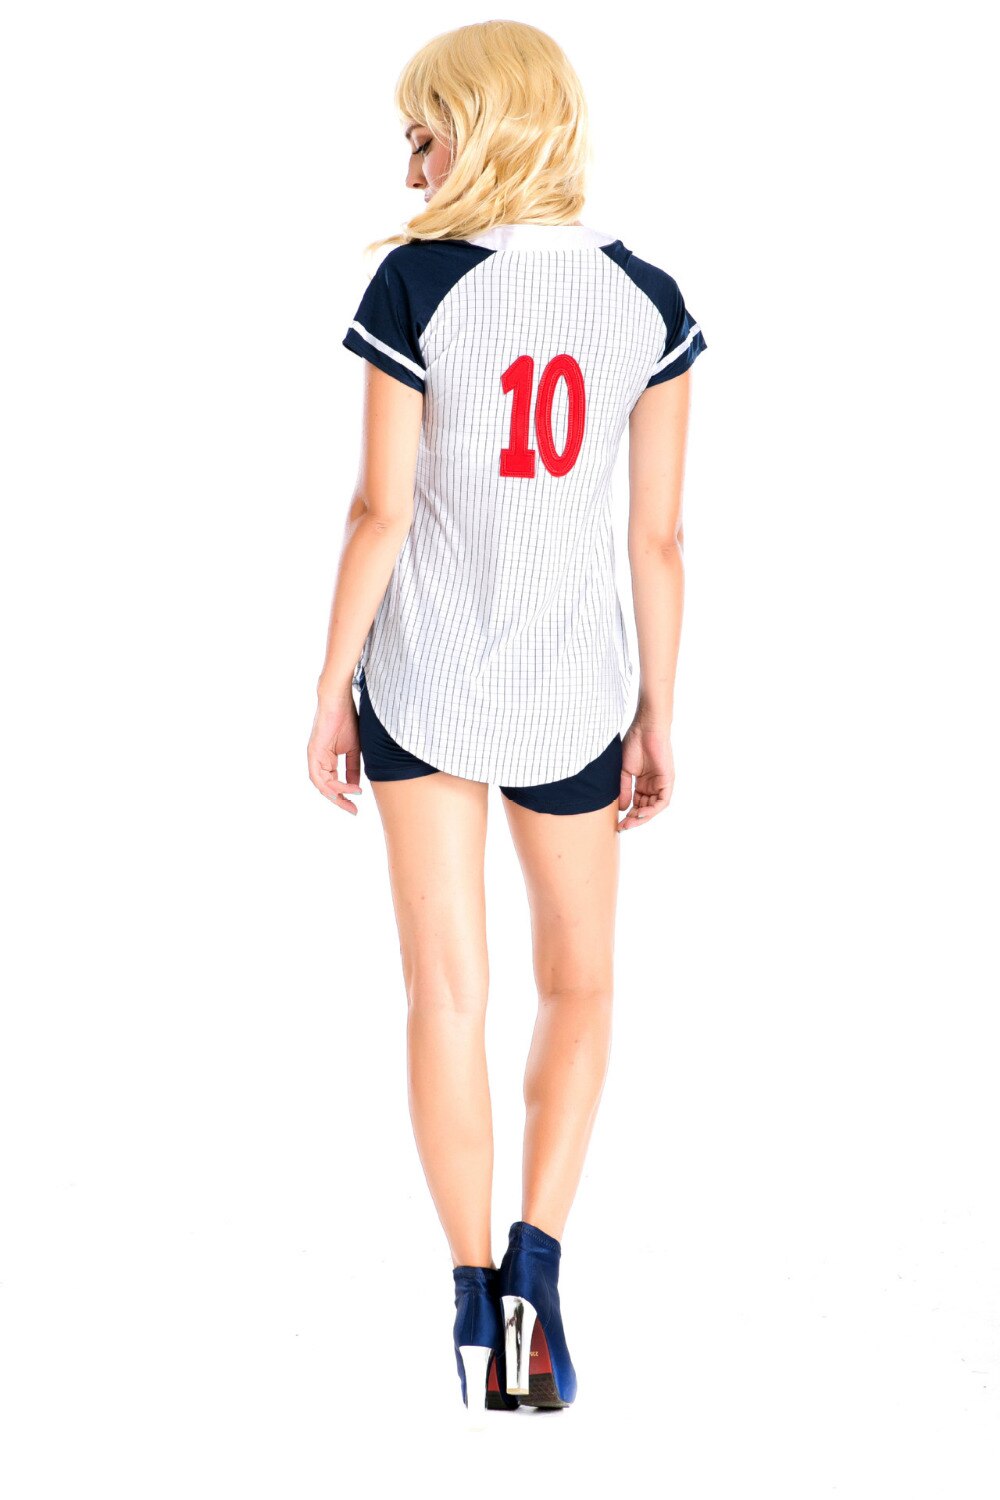 High Quality Sexy Baseball Cheerleader Costume High School Girl Cheerleading Uniform Cheer Fancy Dress